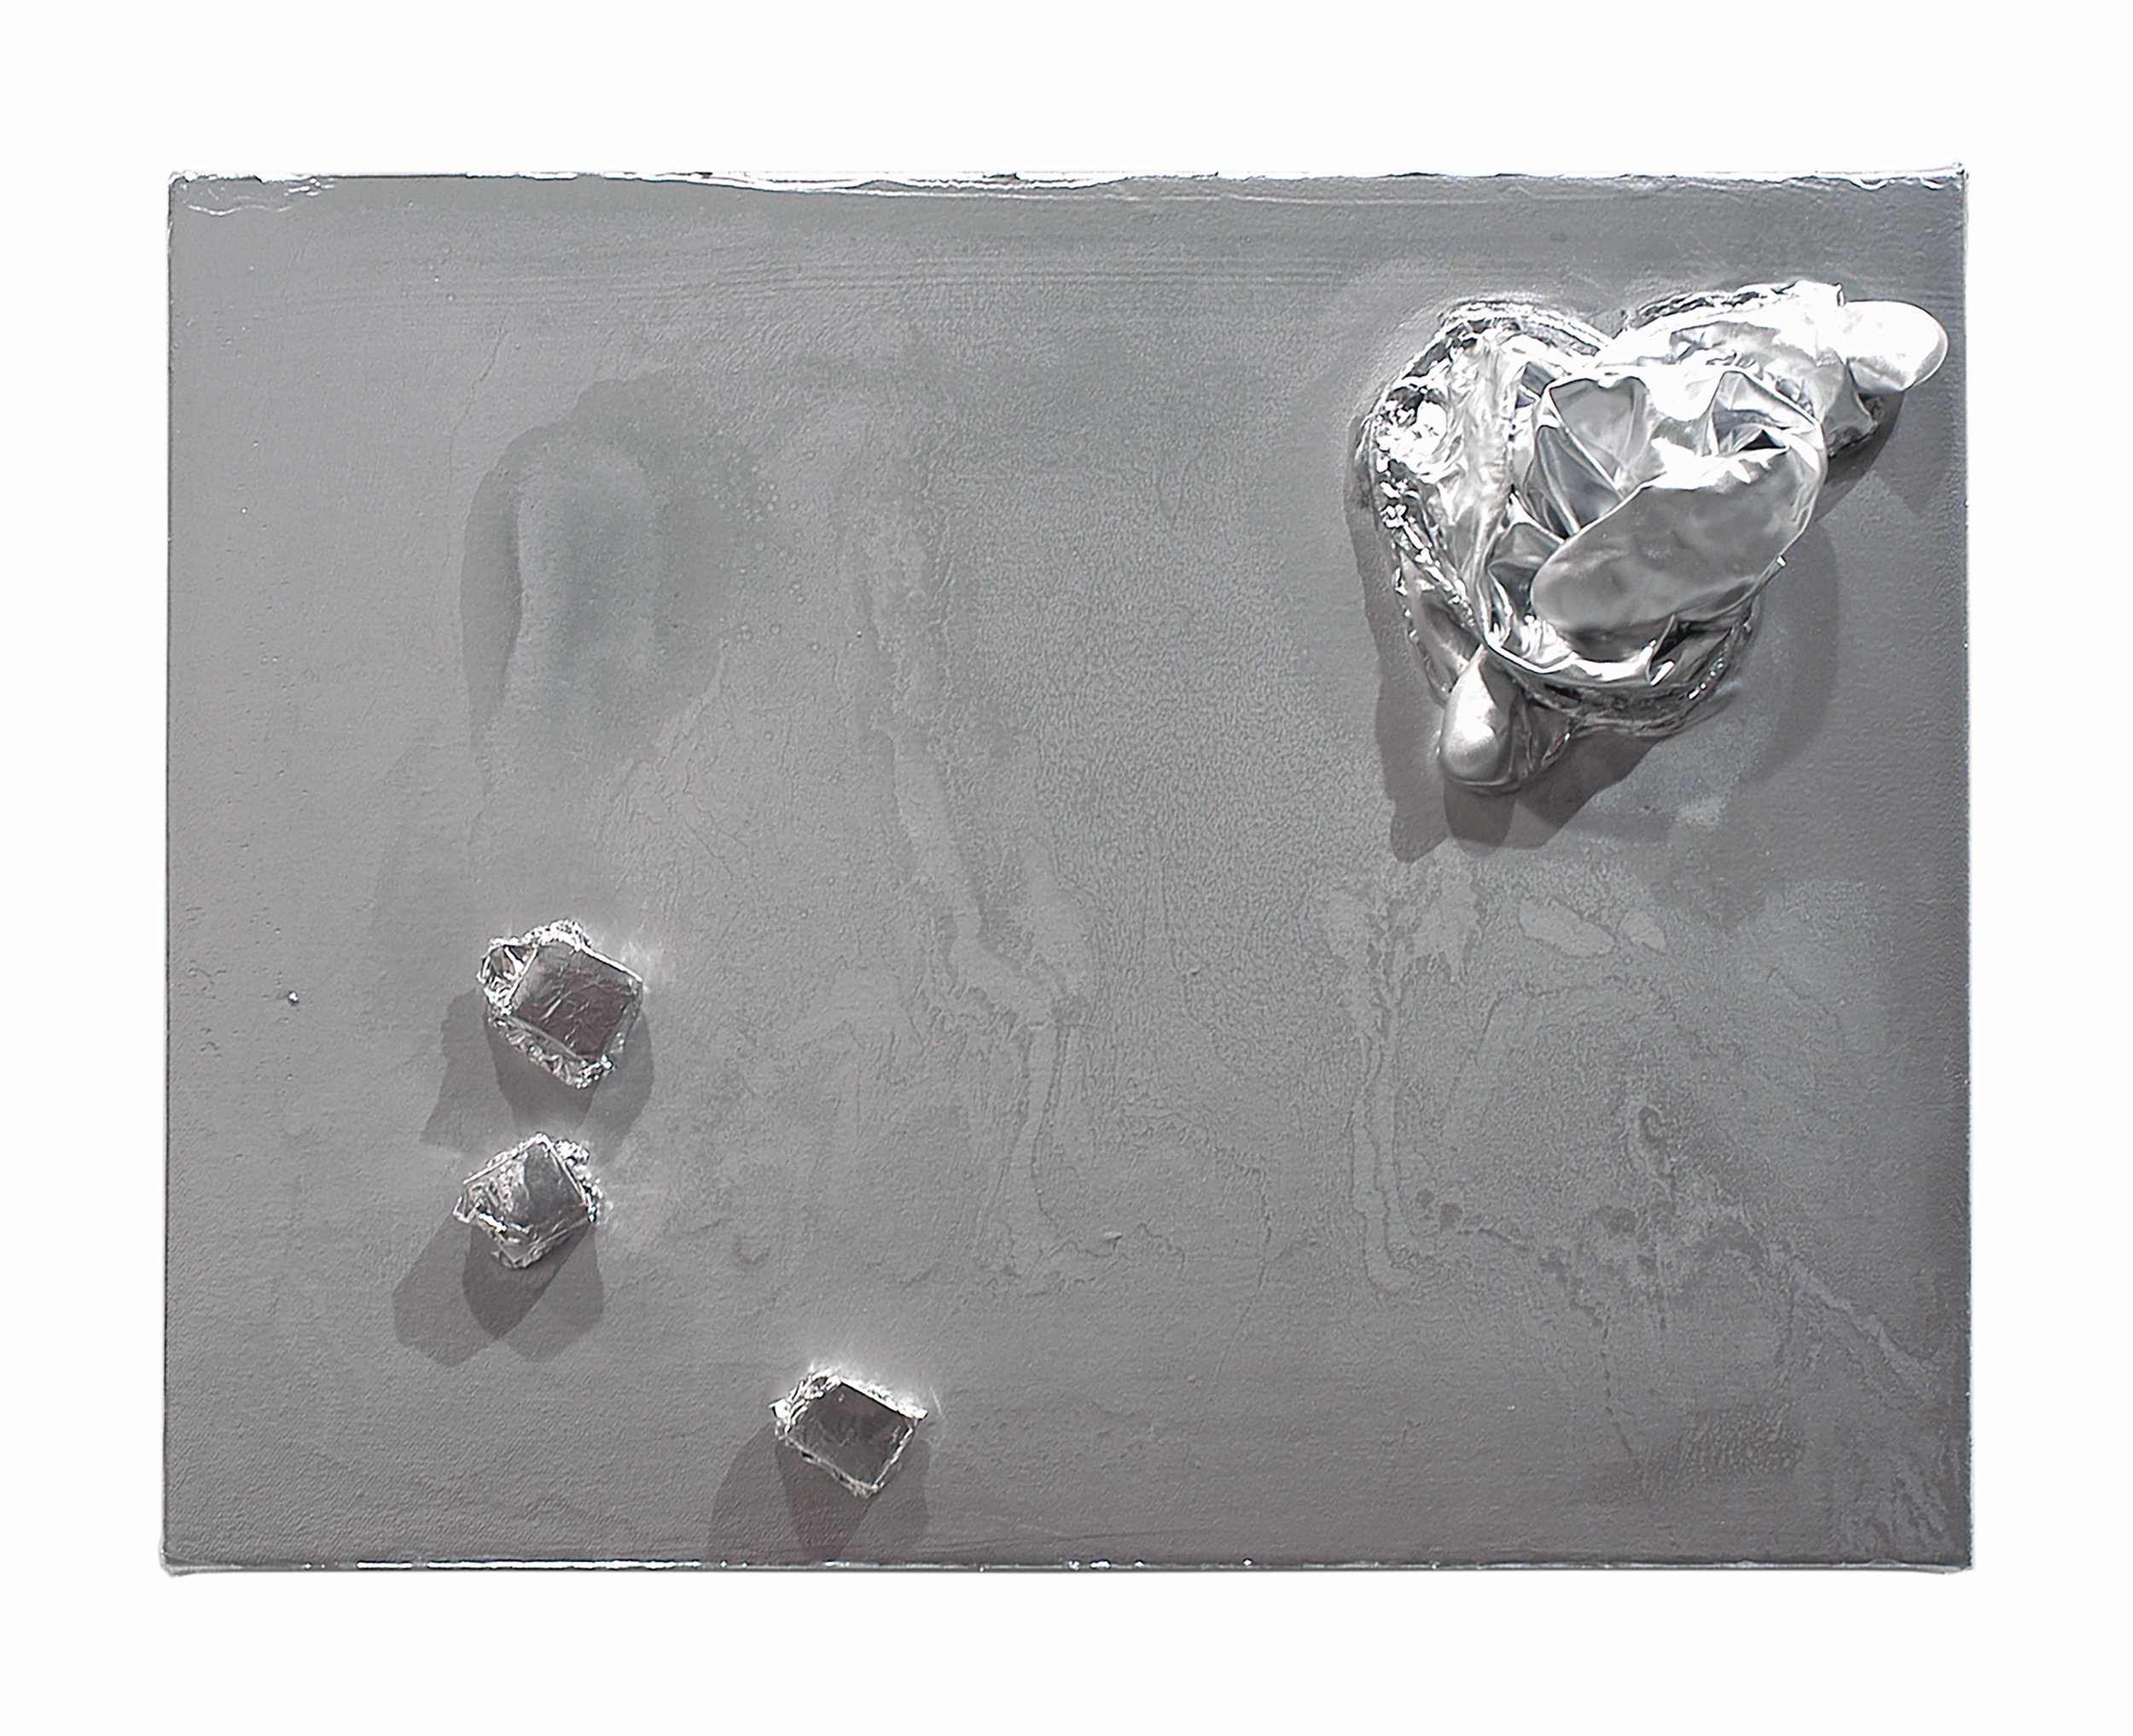  Drew Beattie  Shiny Bits &nbsp; 2005 enamel, acrylic, foil, foam core and rubber on canvas&nbsp; 14 x 11 inches 